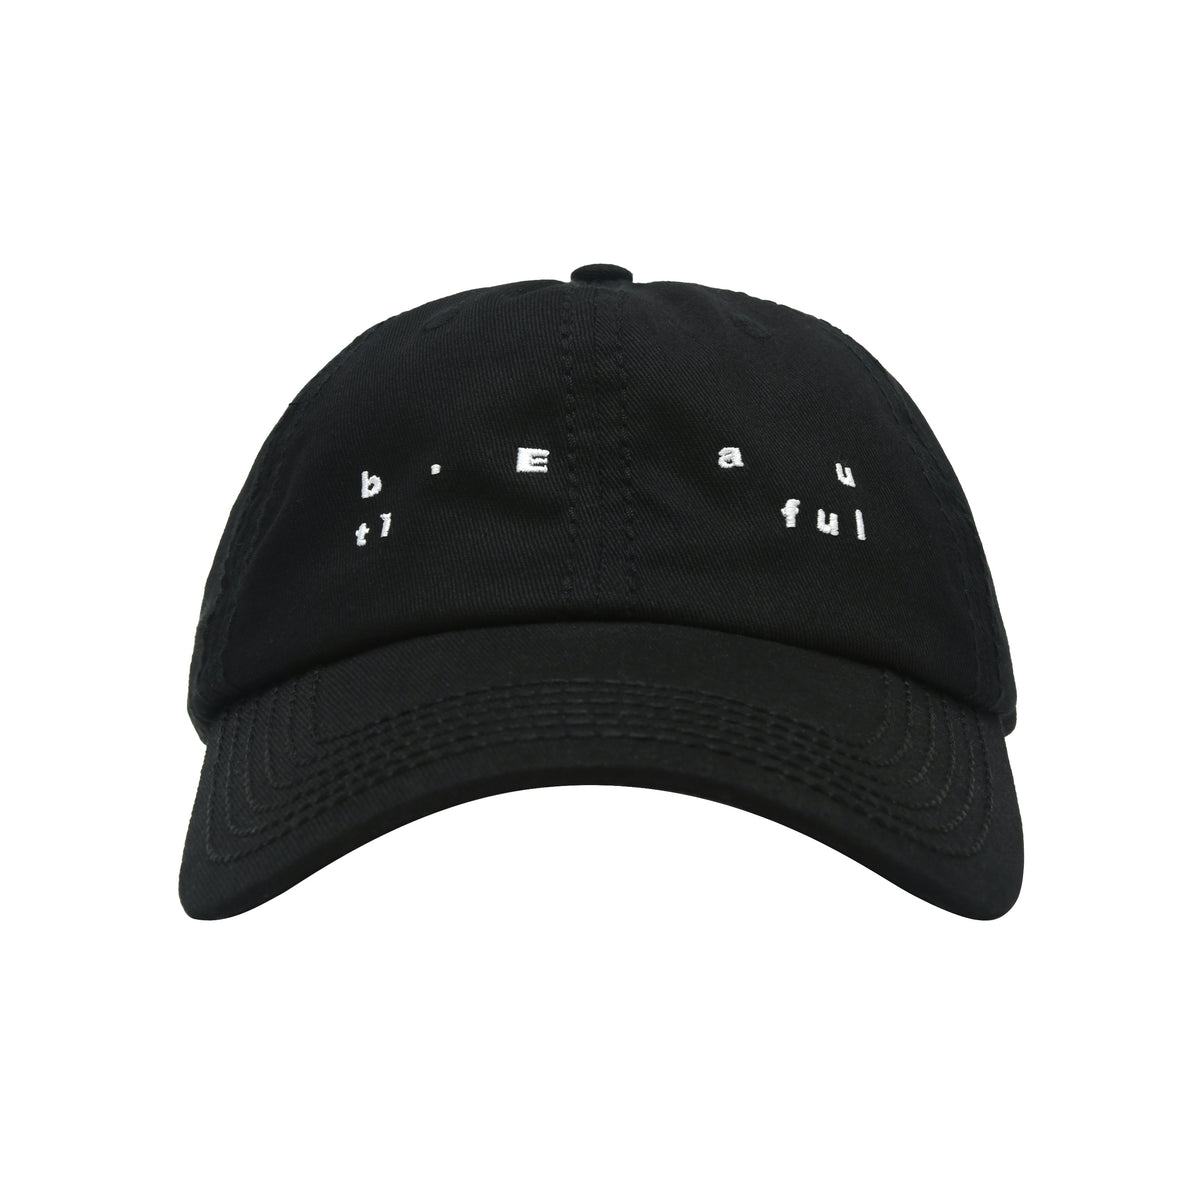 Spirit 6 Panel Hat (Black/White)